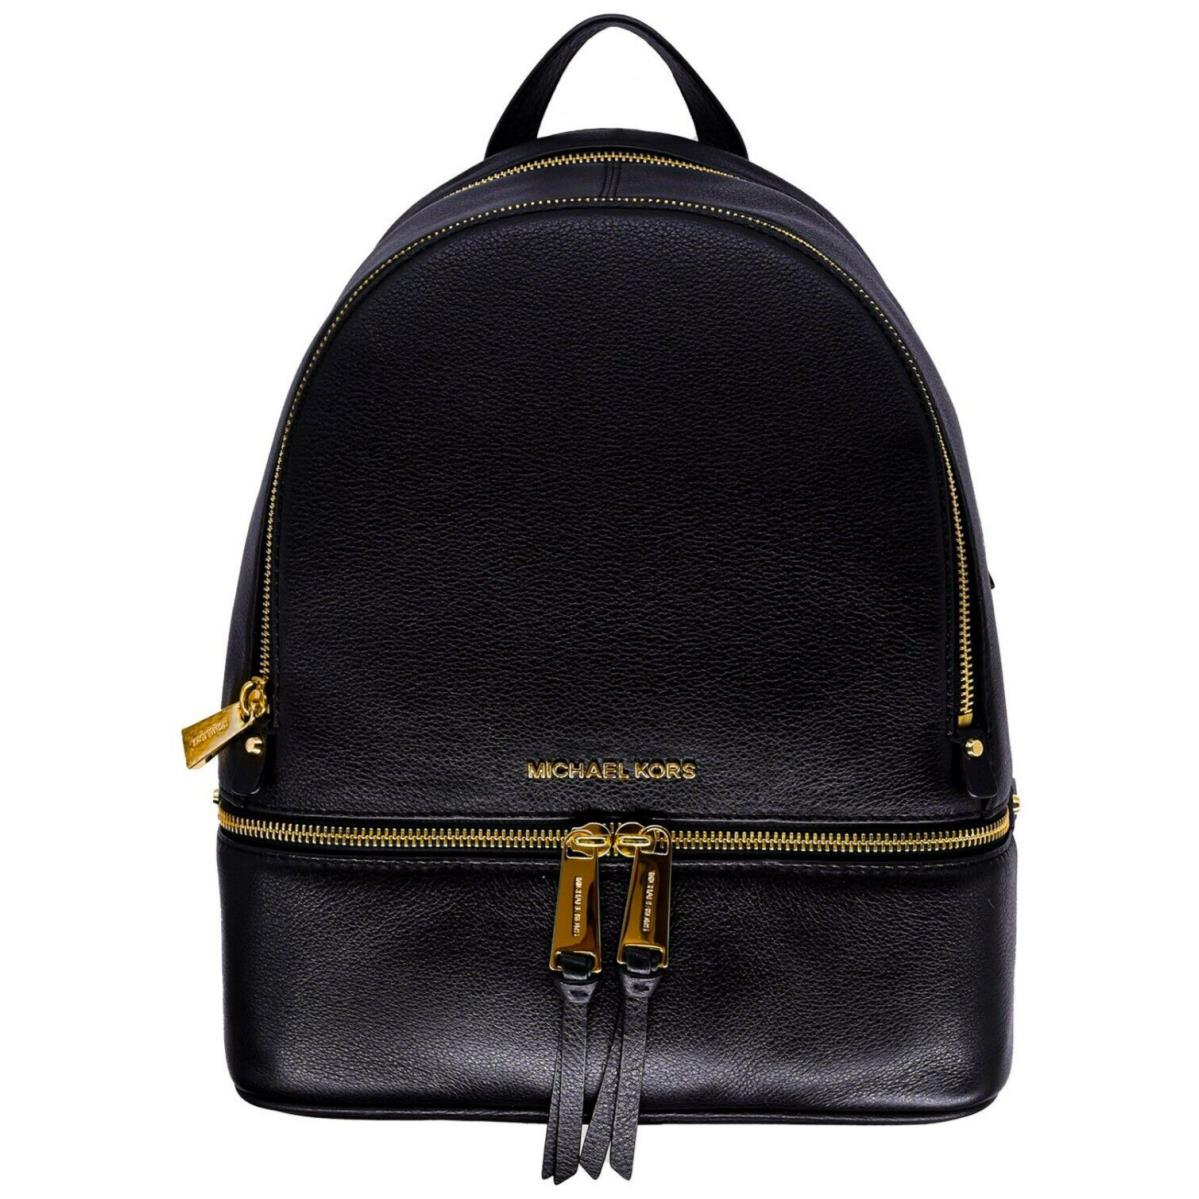 Michael Kors Rhea Zip Medium Backpack Black Leather Travel School Bag